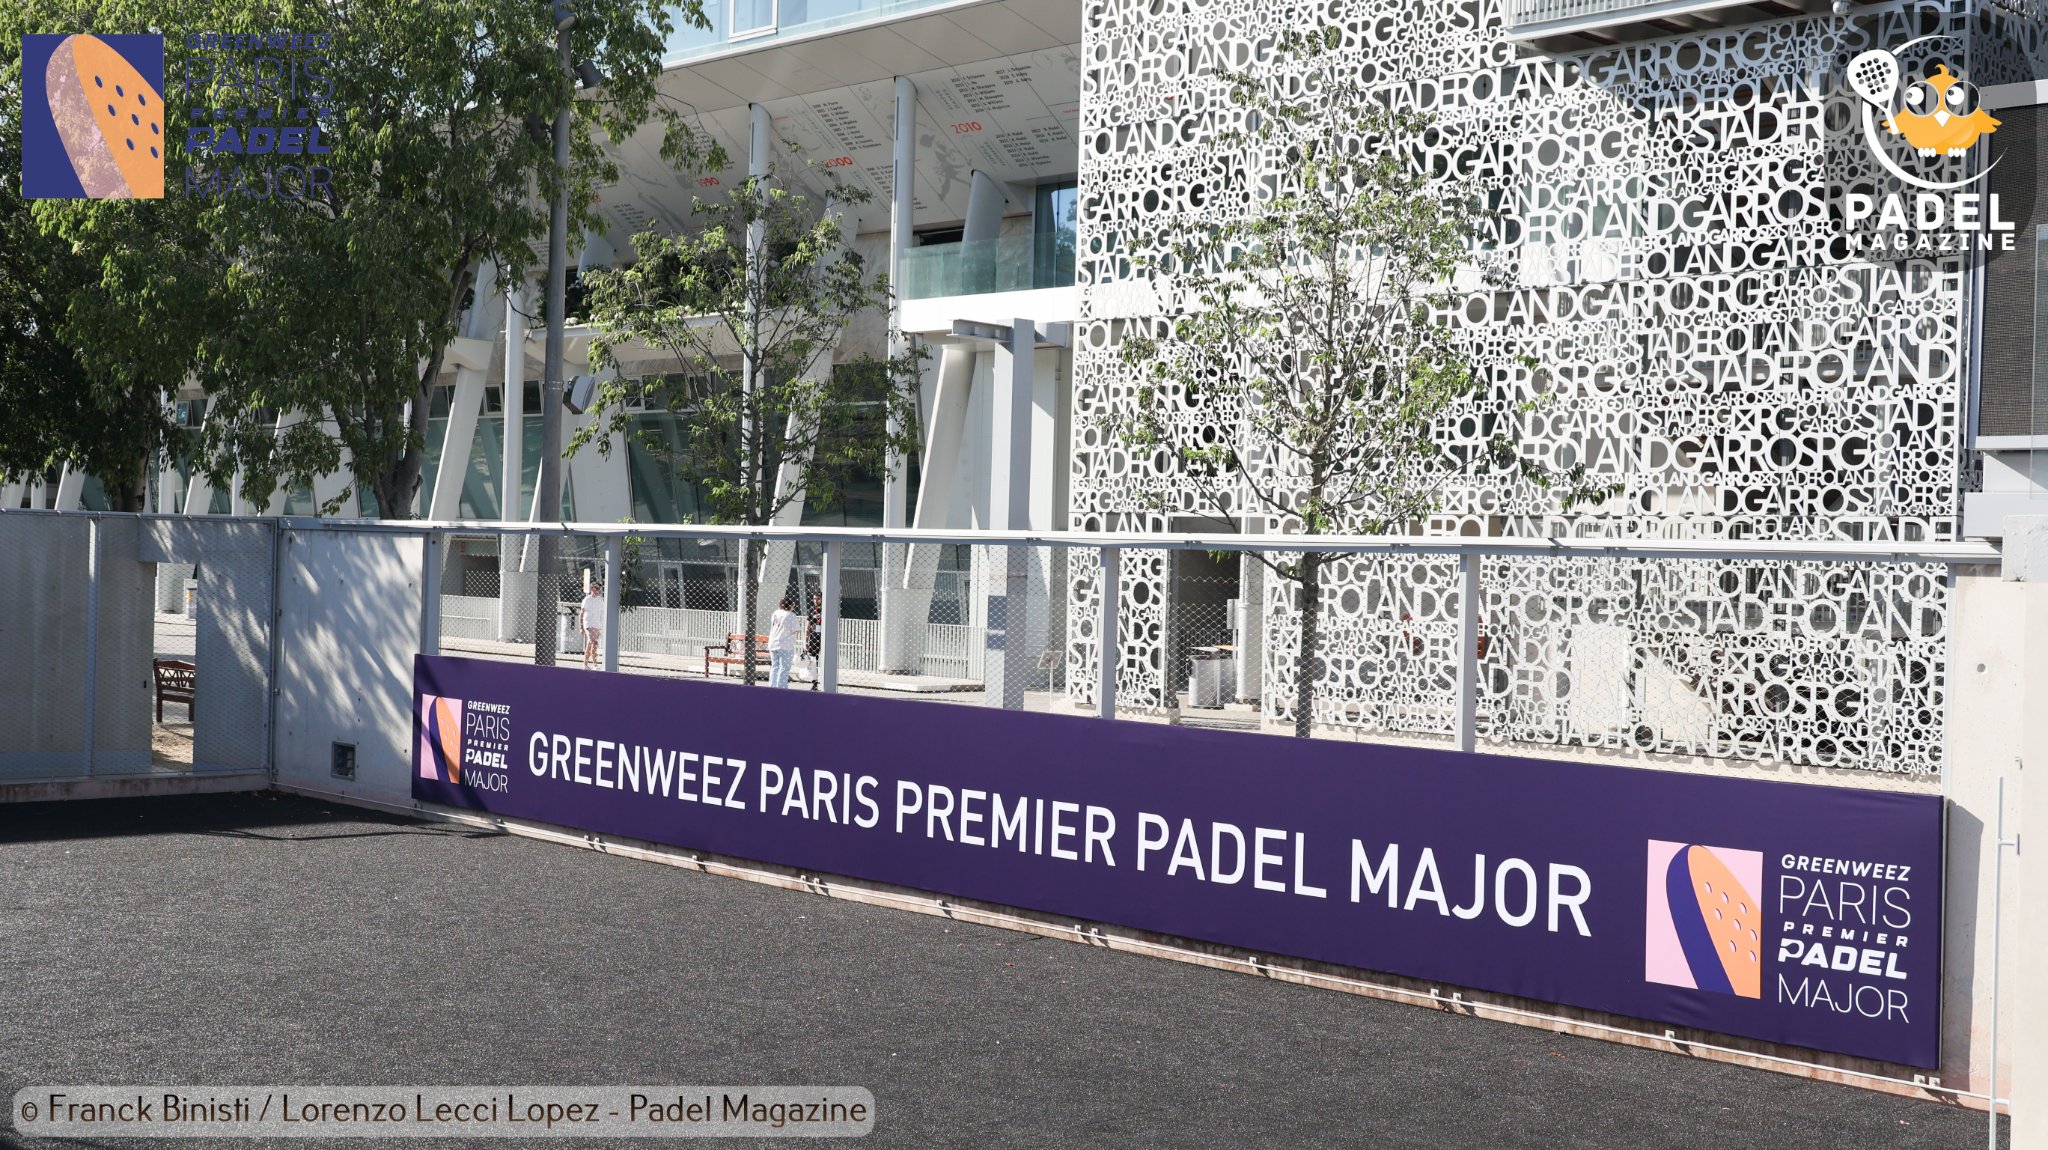 Greenweez Paris Premier Padel Major 2022 Roland garros